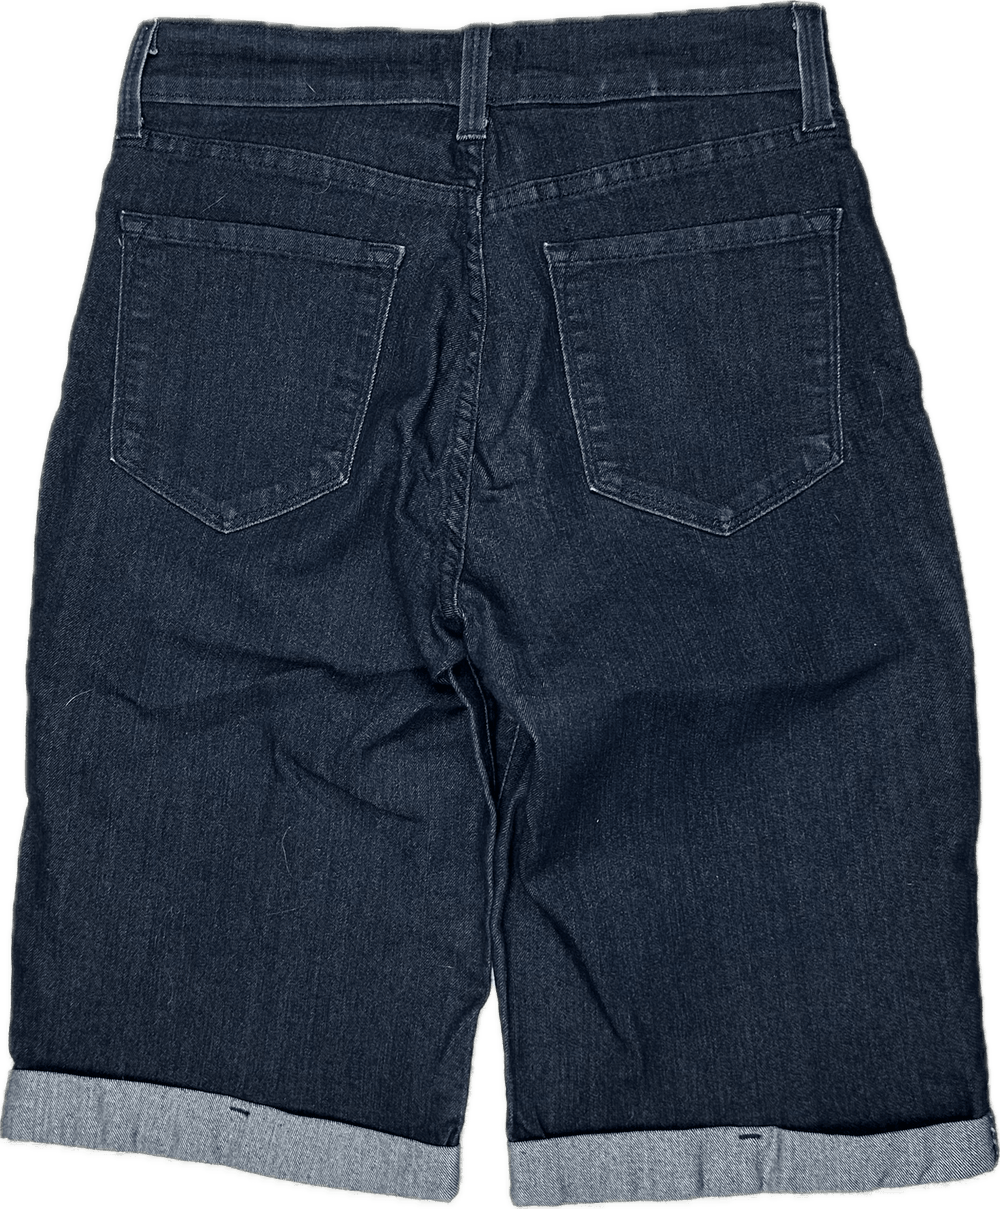 NYDJ - Lift & Tuck Blue Long Cuffed Shorts -Size 0US suit 6AU - Jean Pool